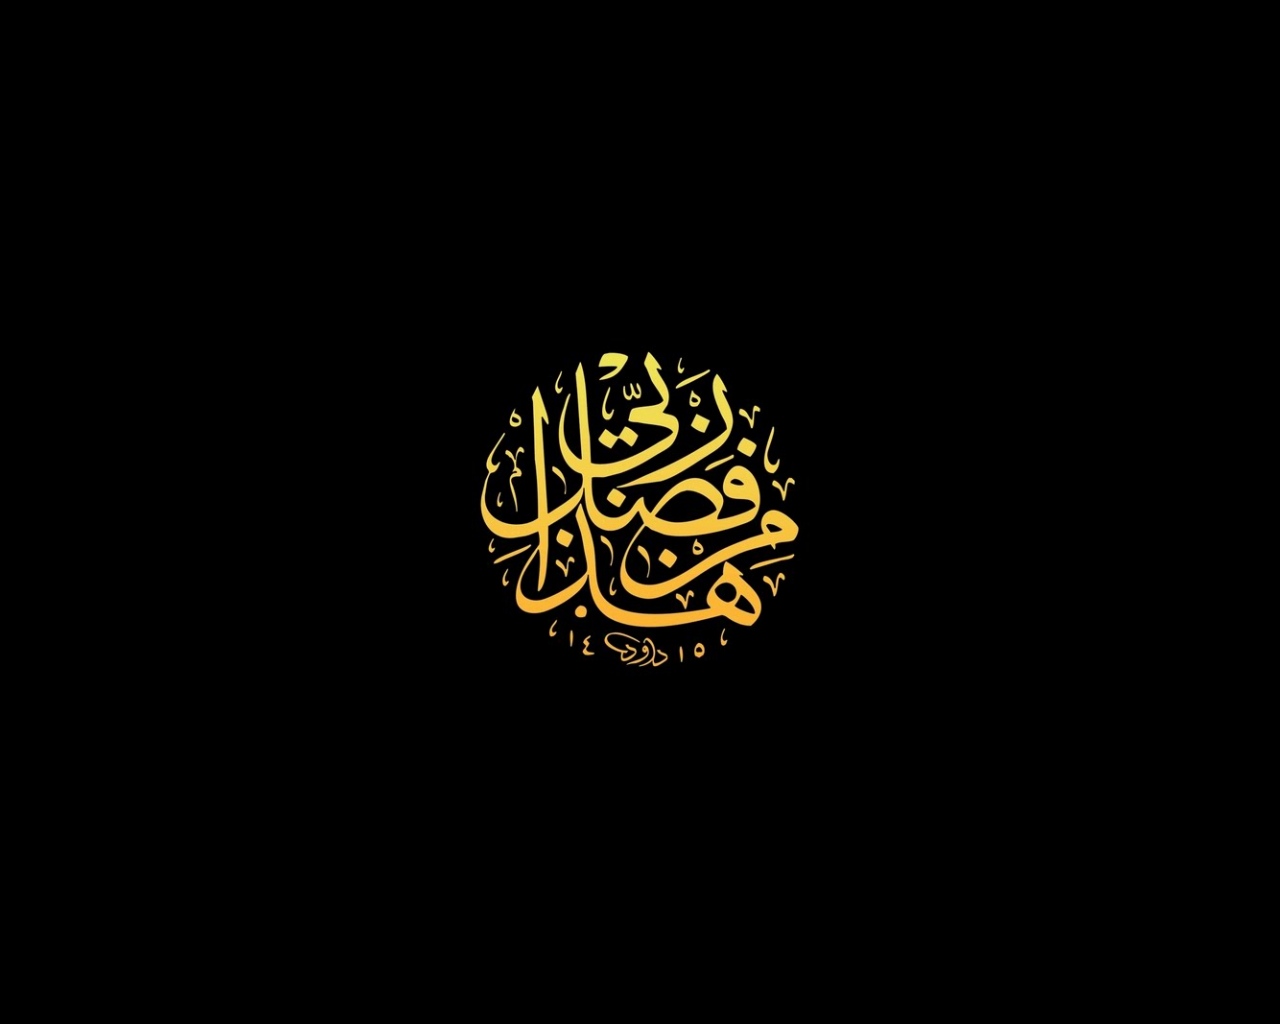 Masha Allah - Golden - Black Background